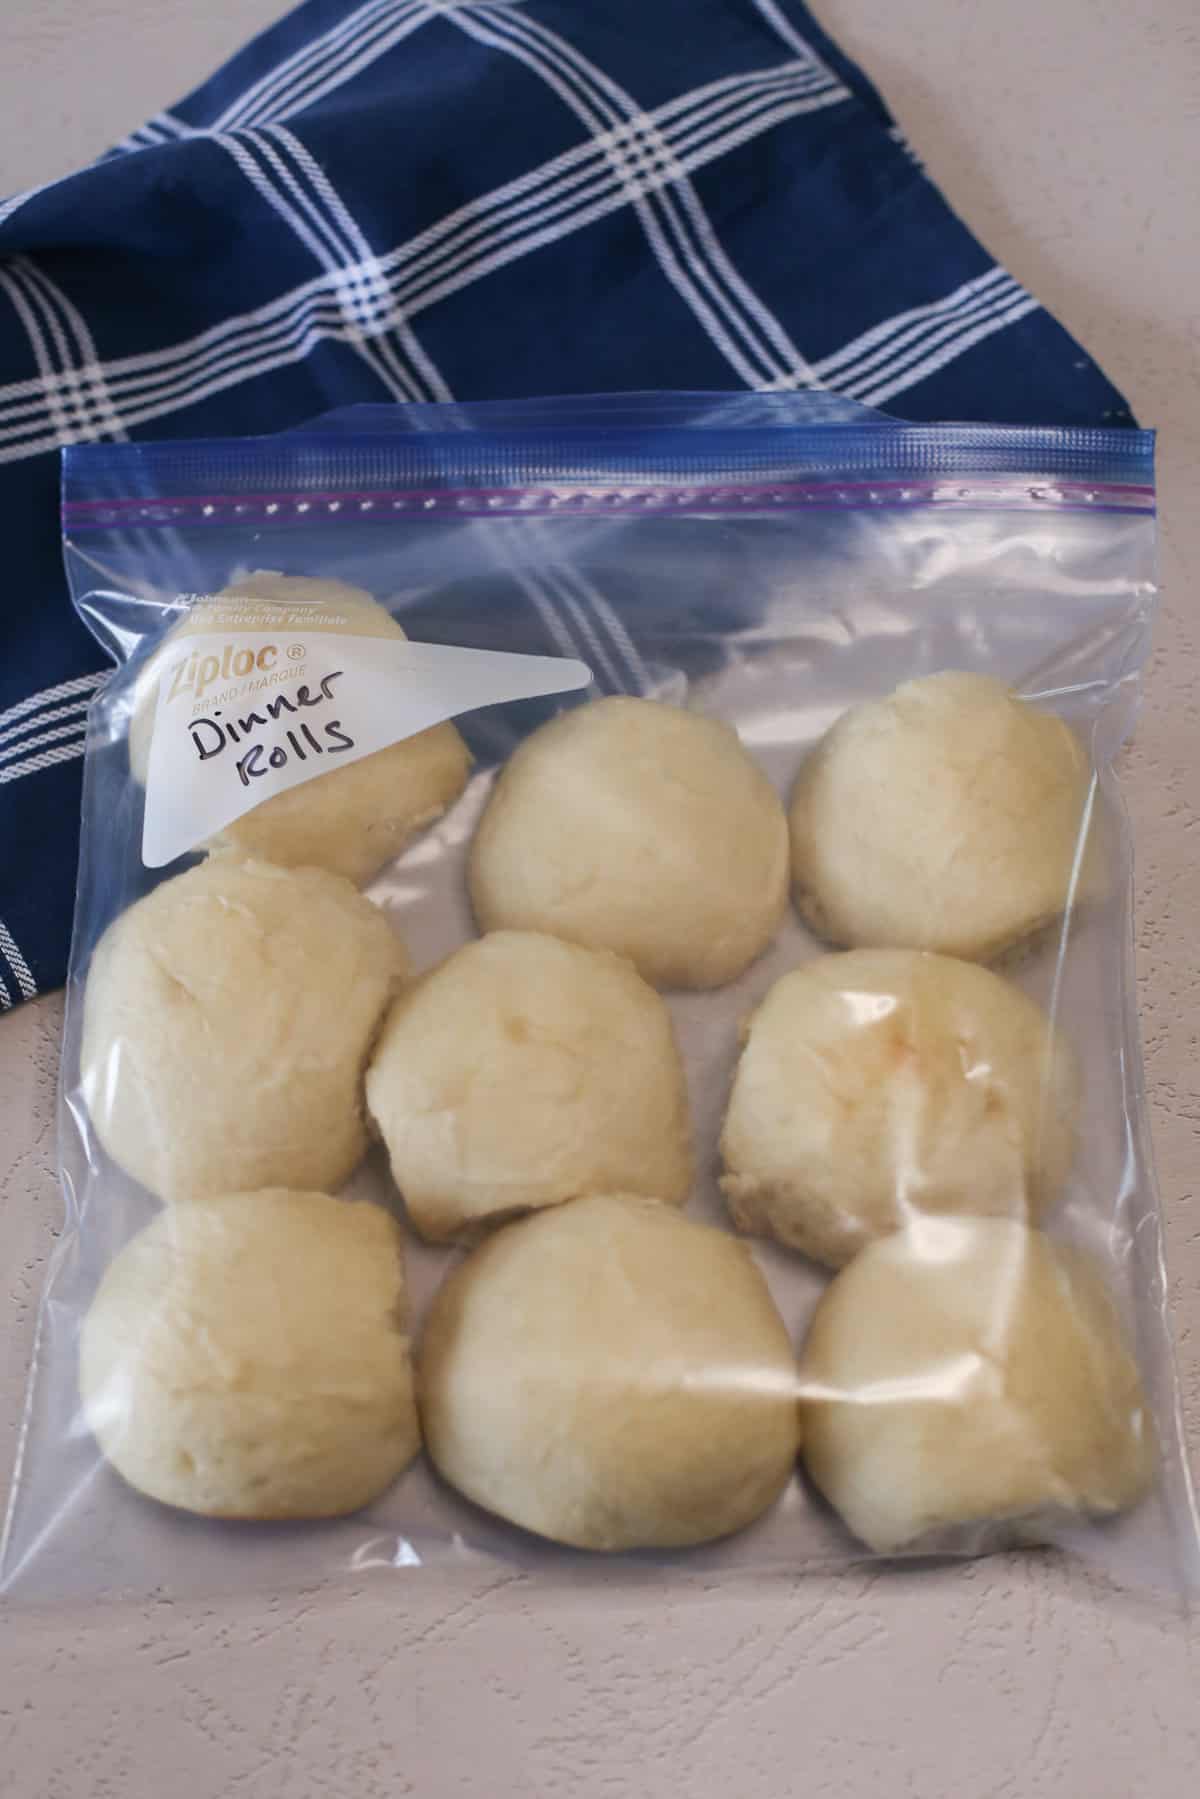 Baked dinner rolls in a freezer bag.